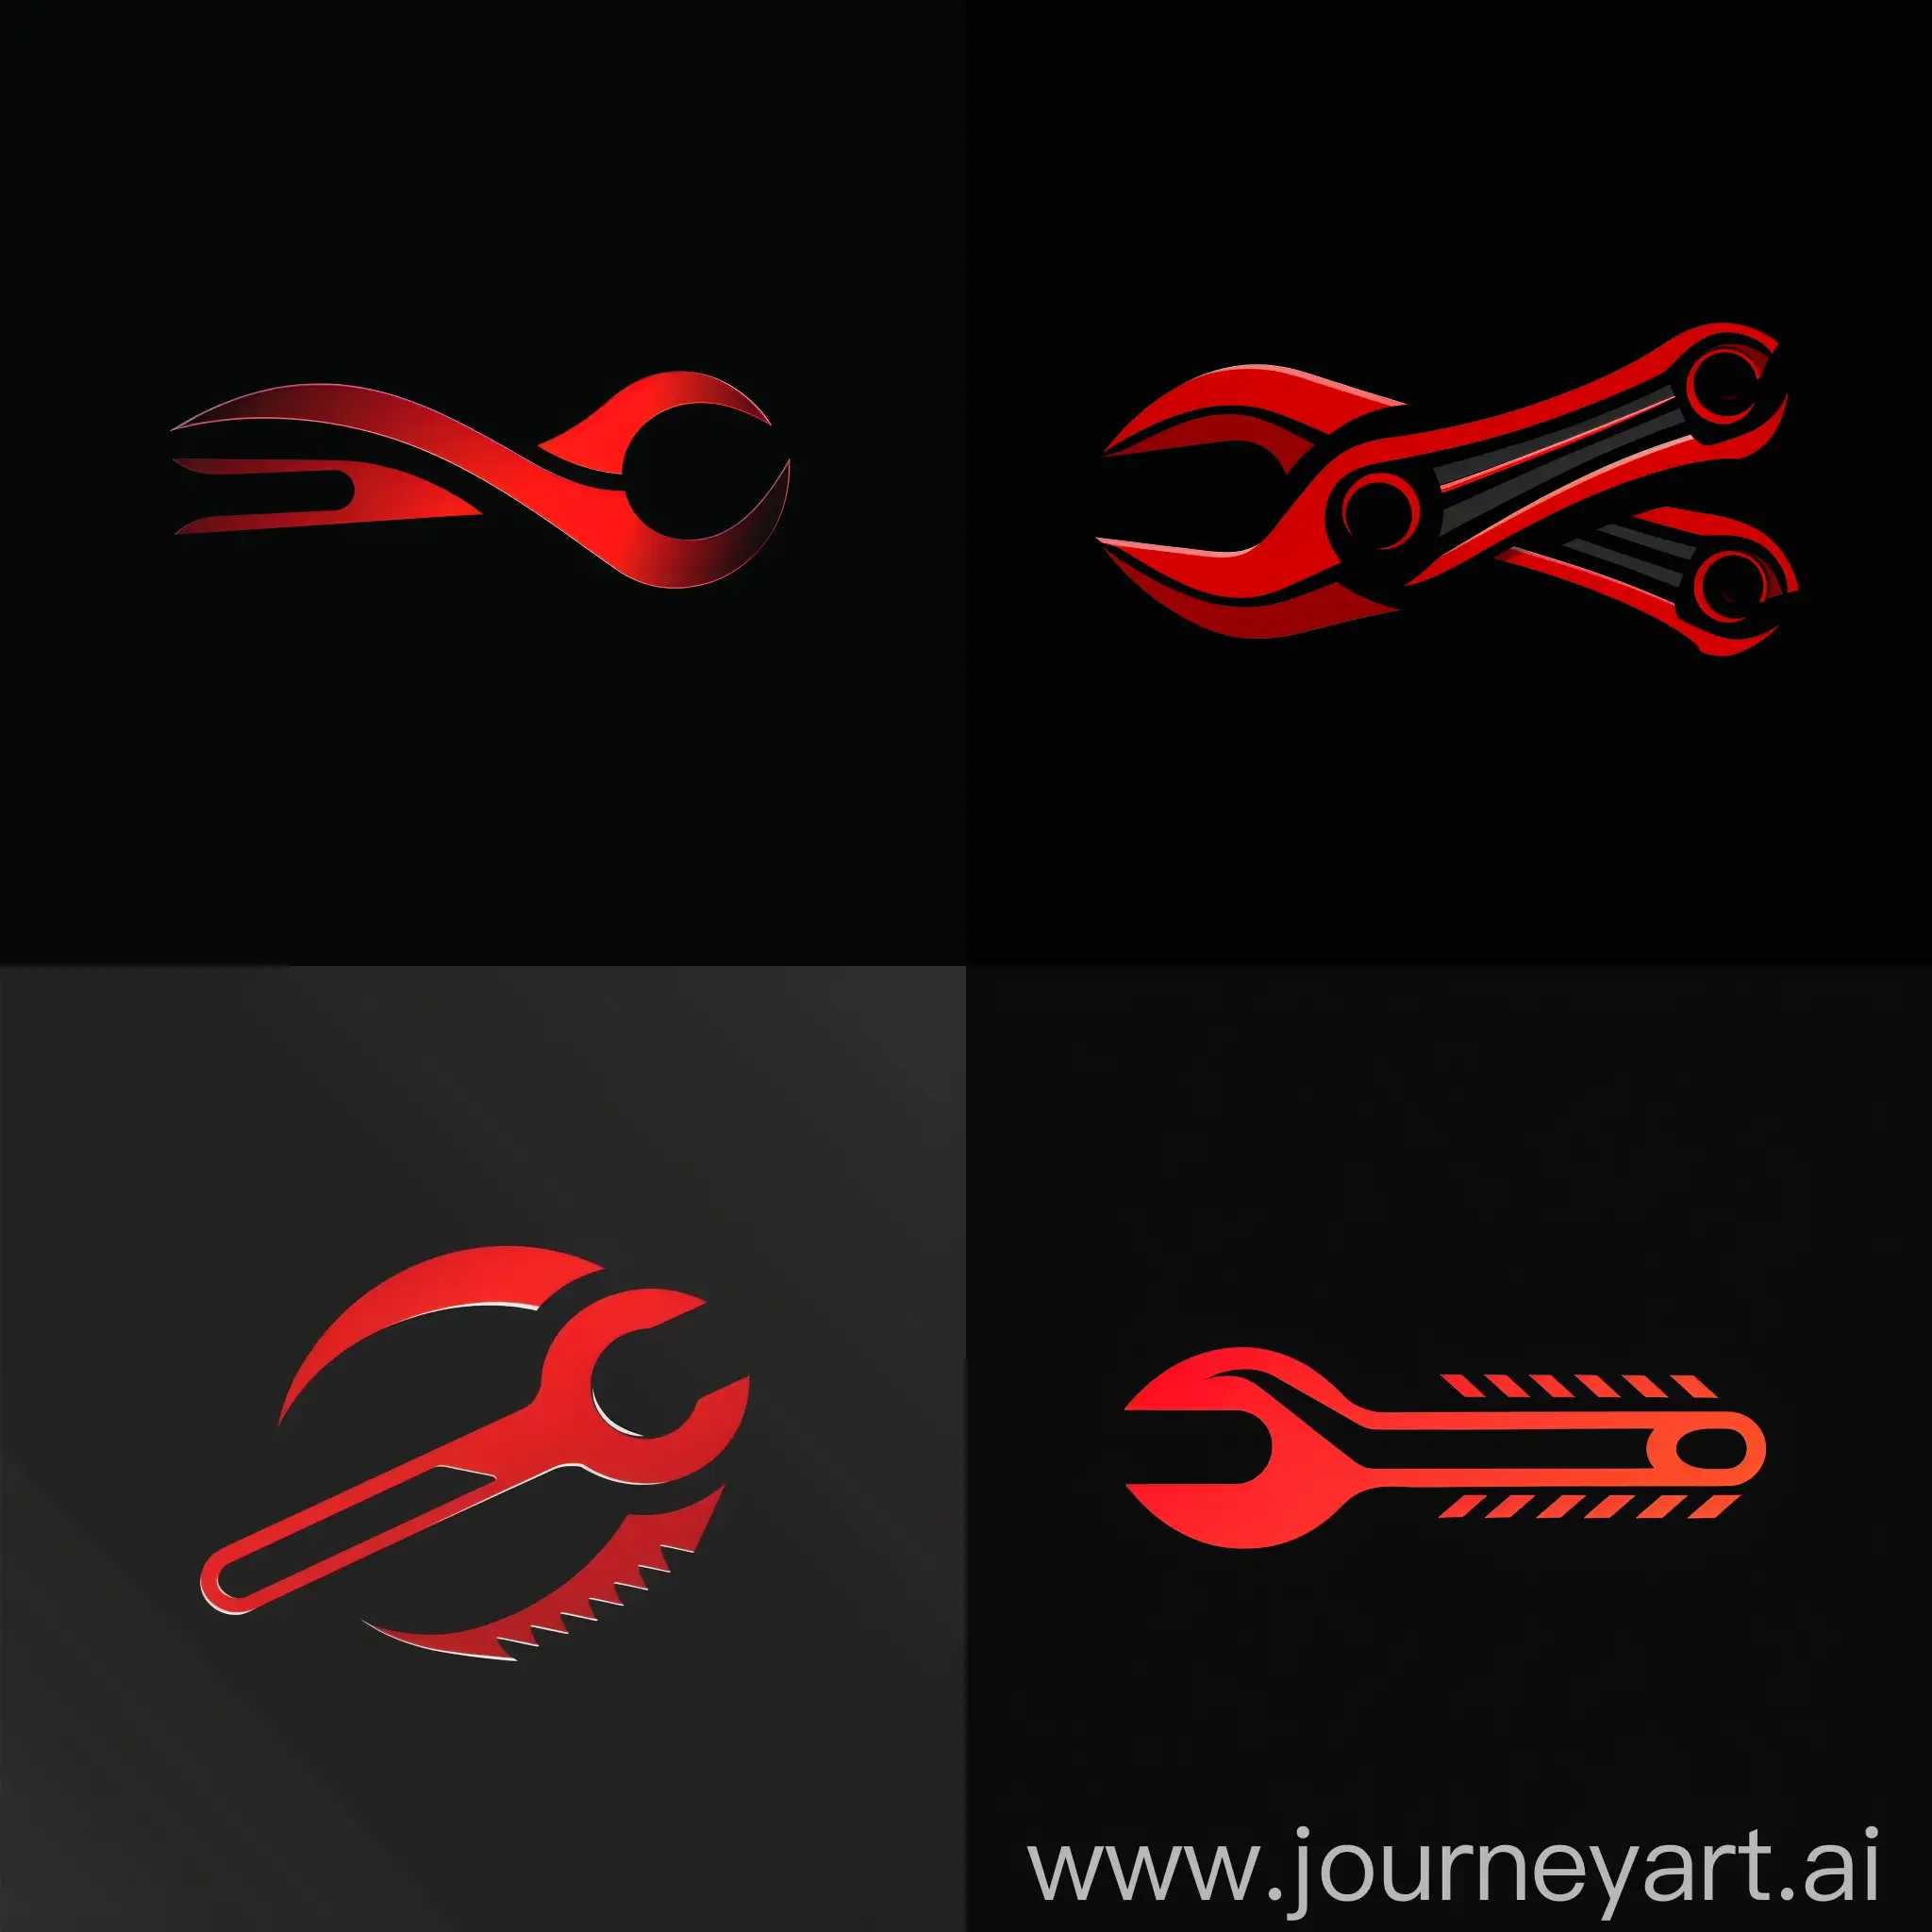 Modern-Red-and-Black-Auto-Service-Logo-Design